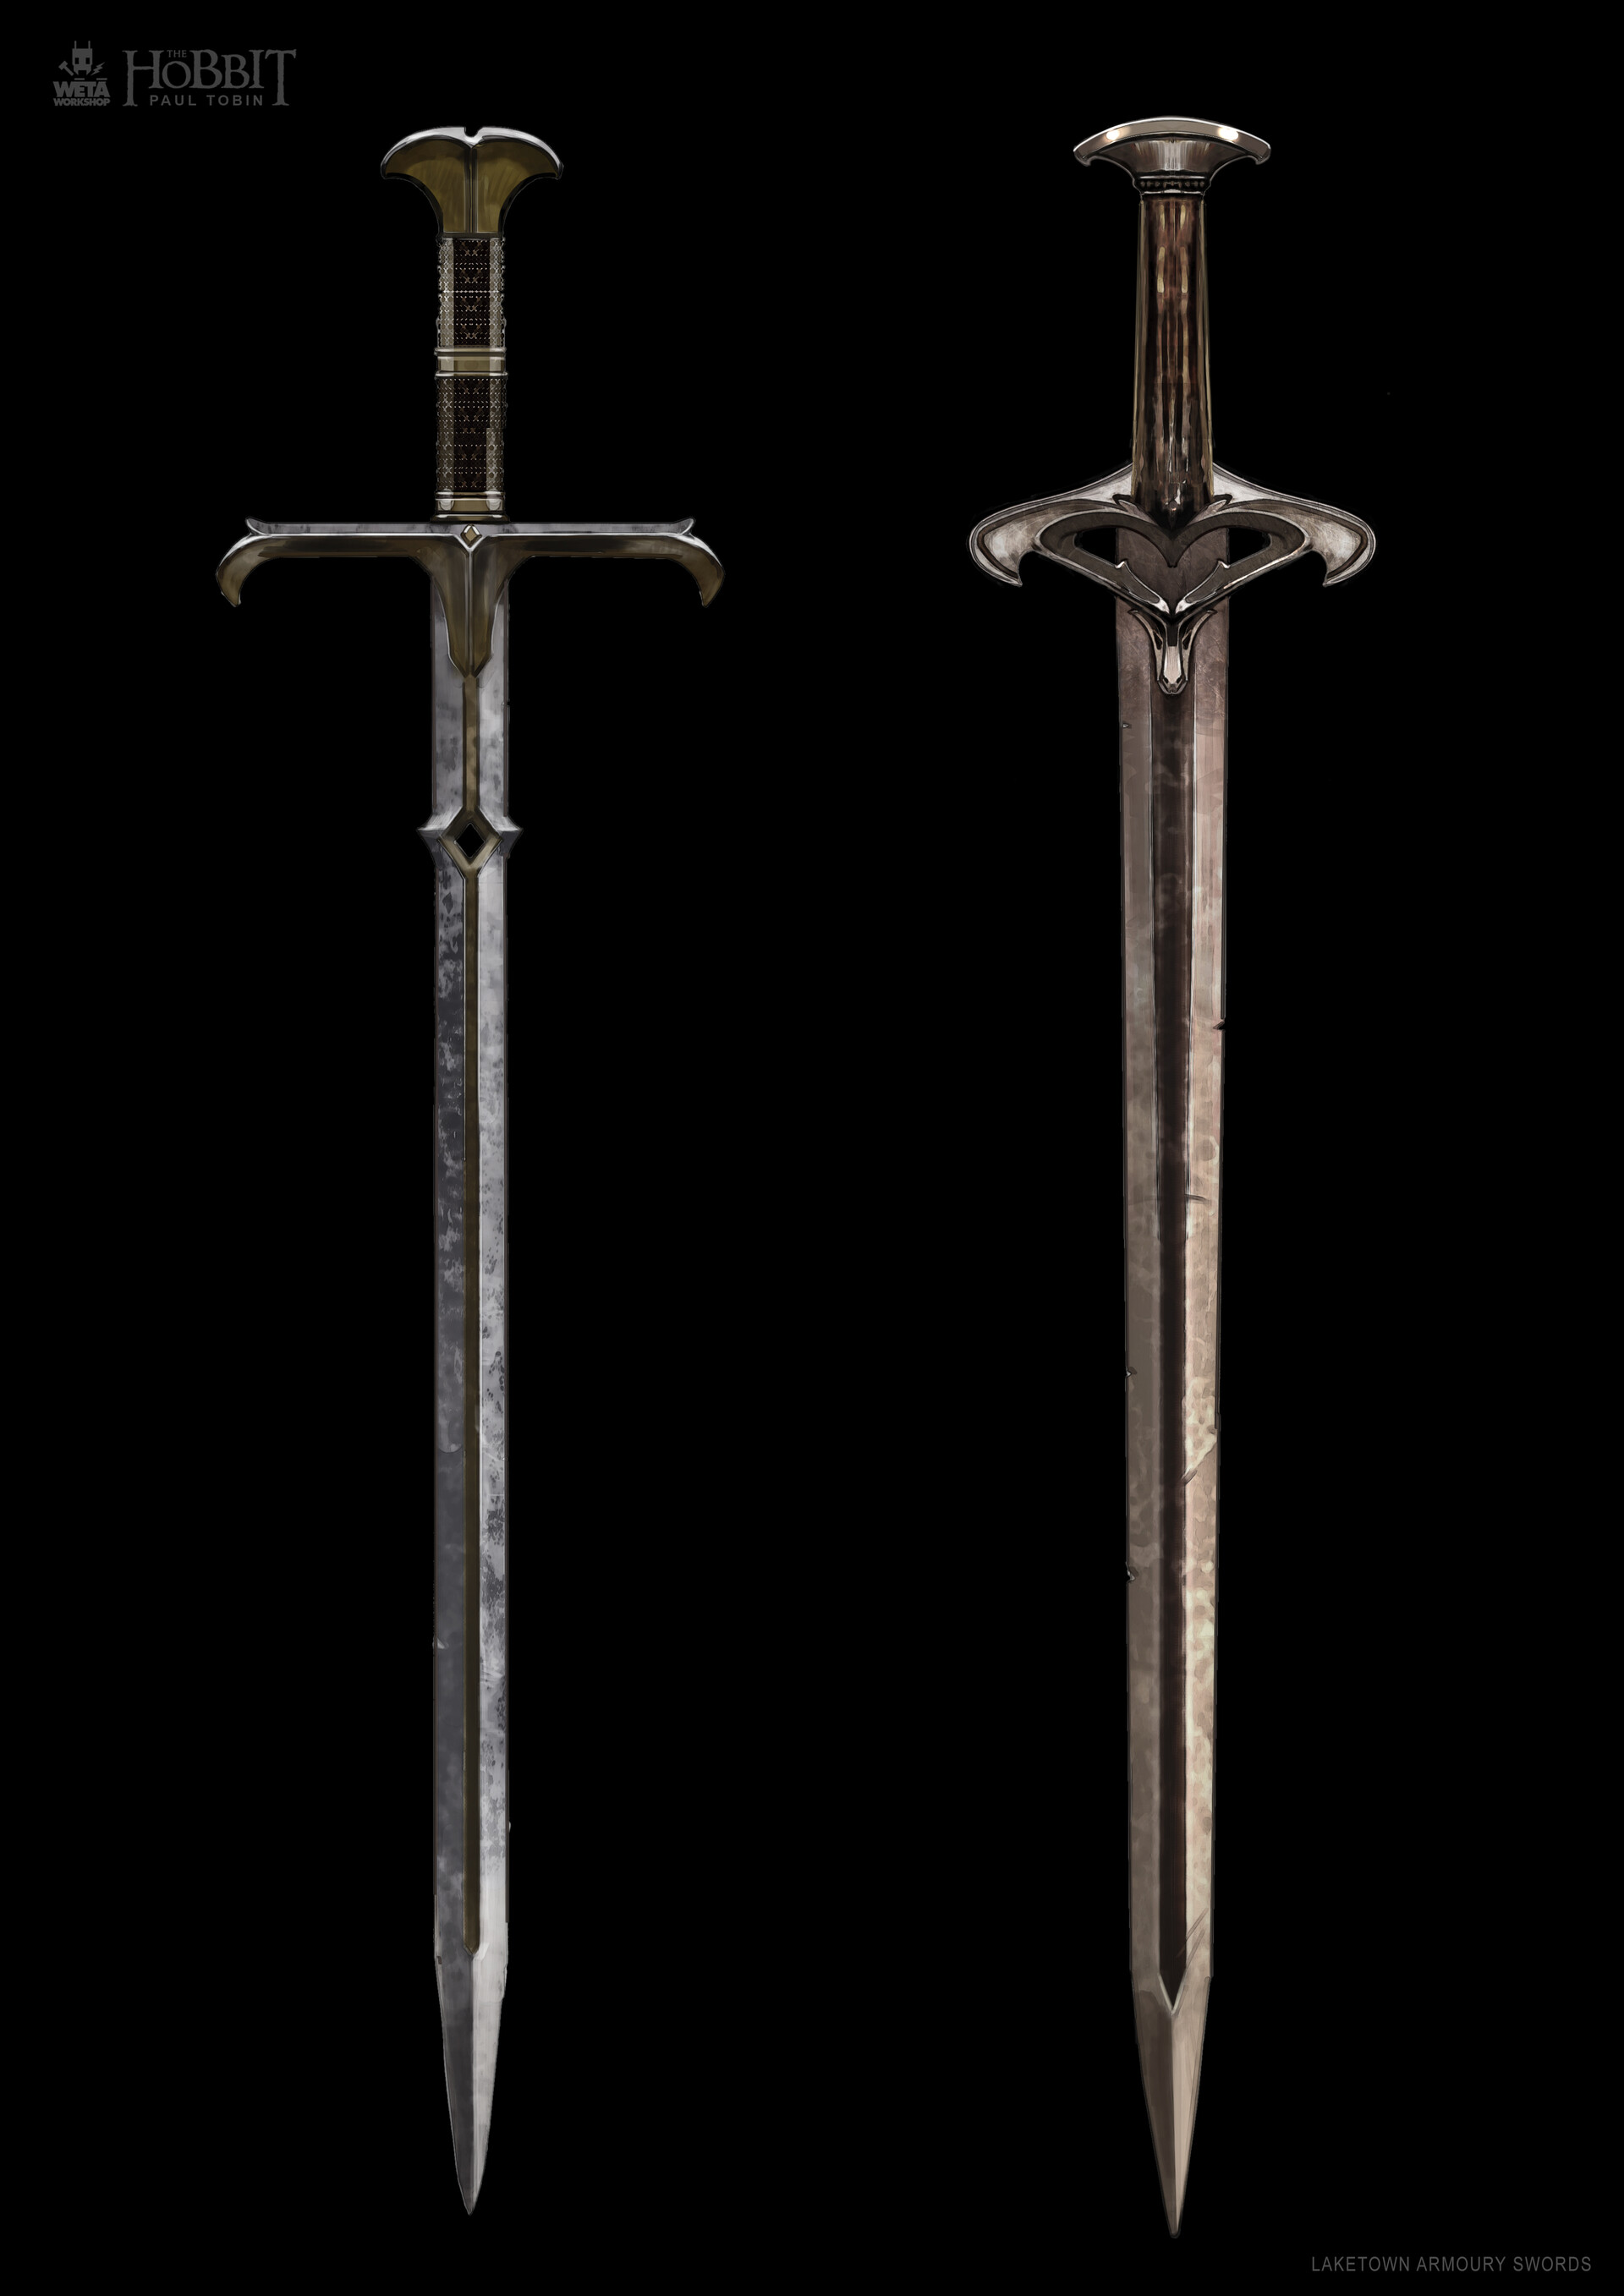 Paul Tobin Art - Laketown Armoury Swords